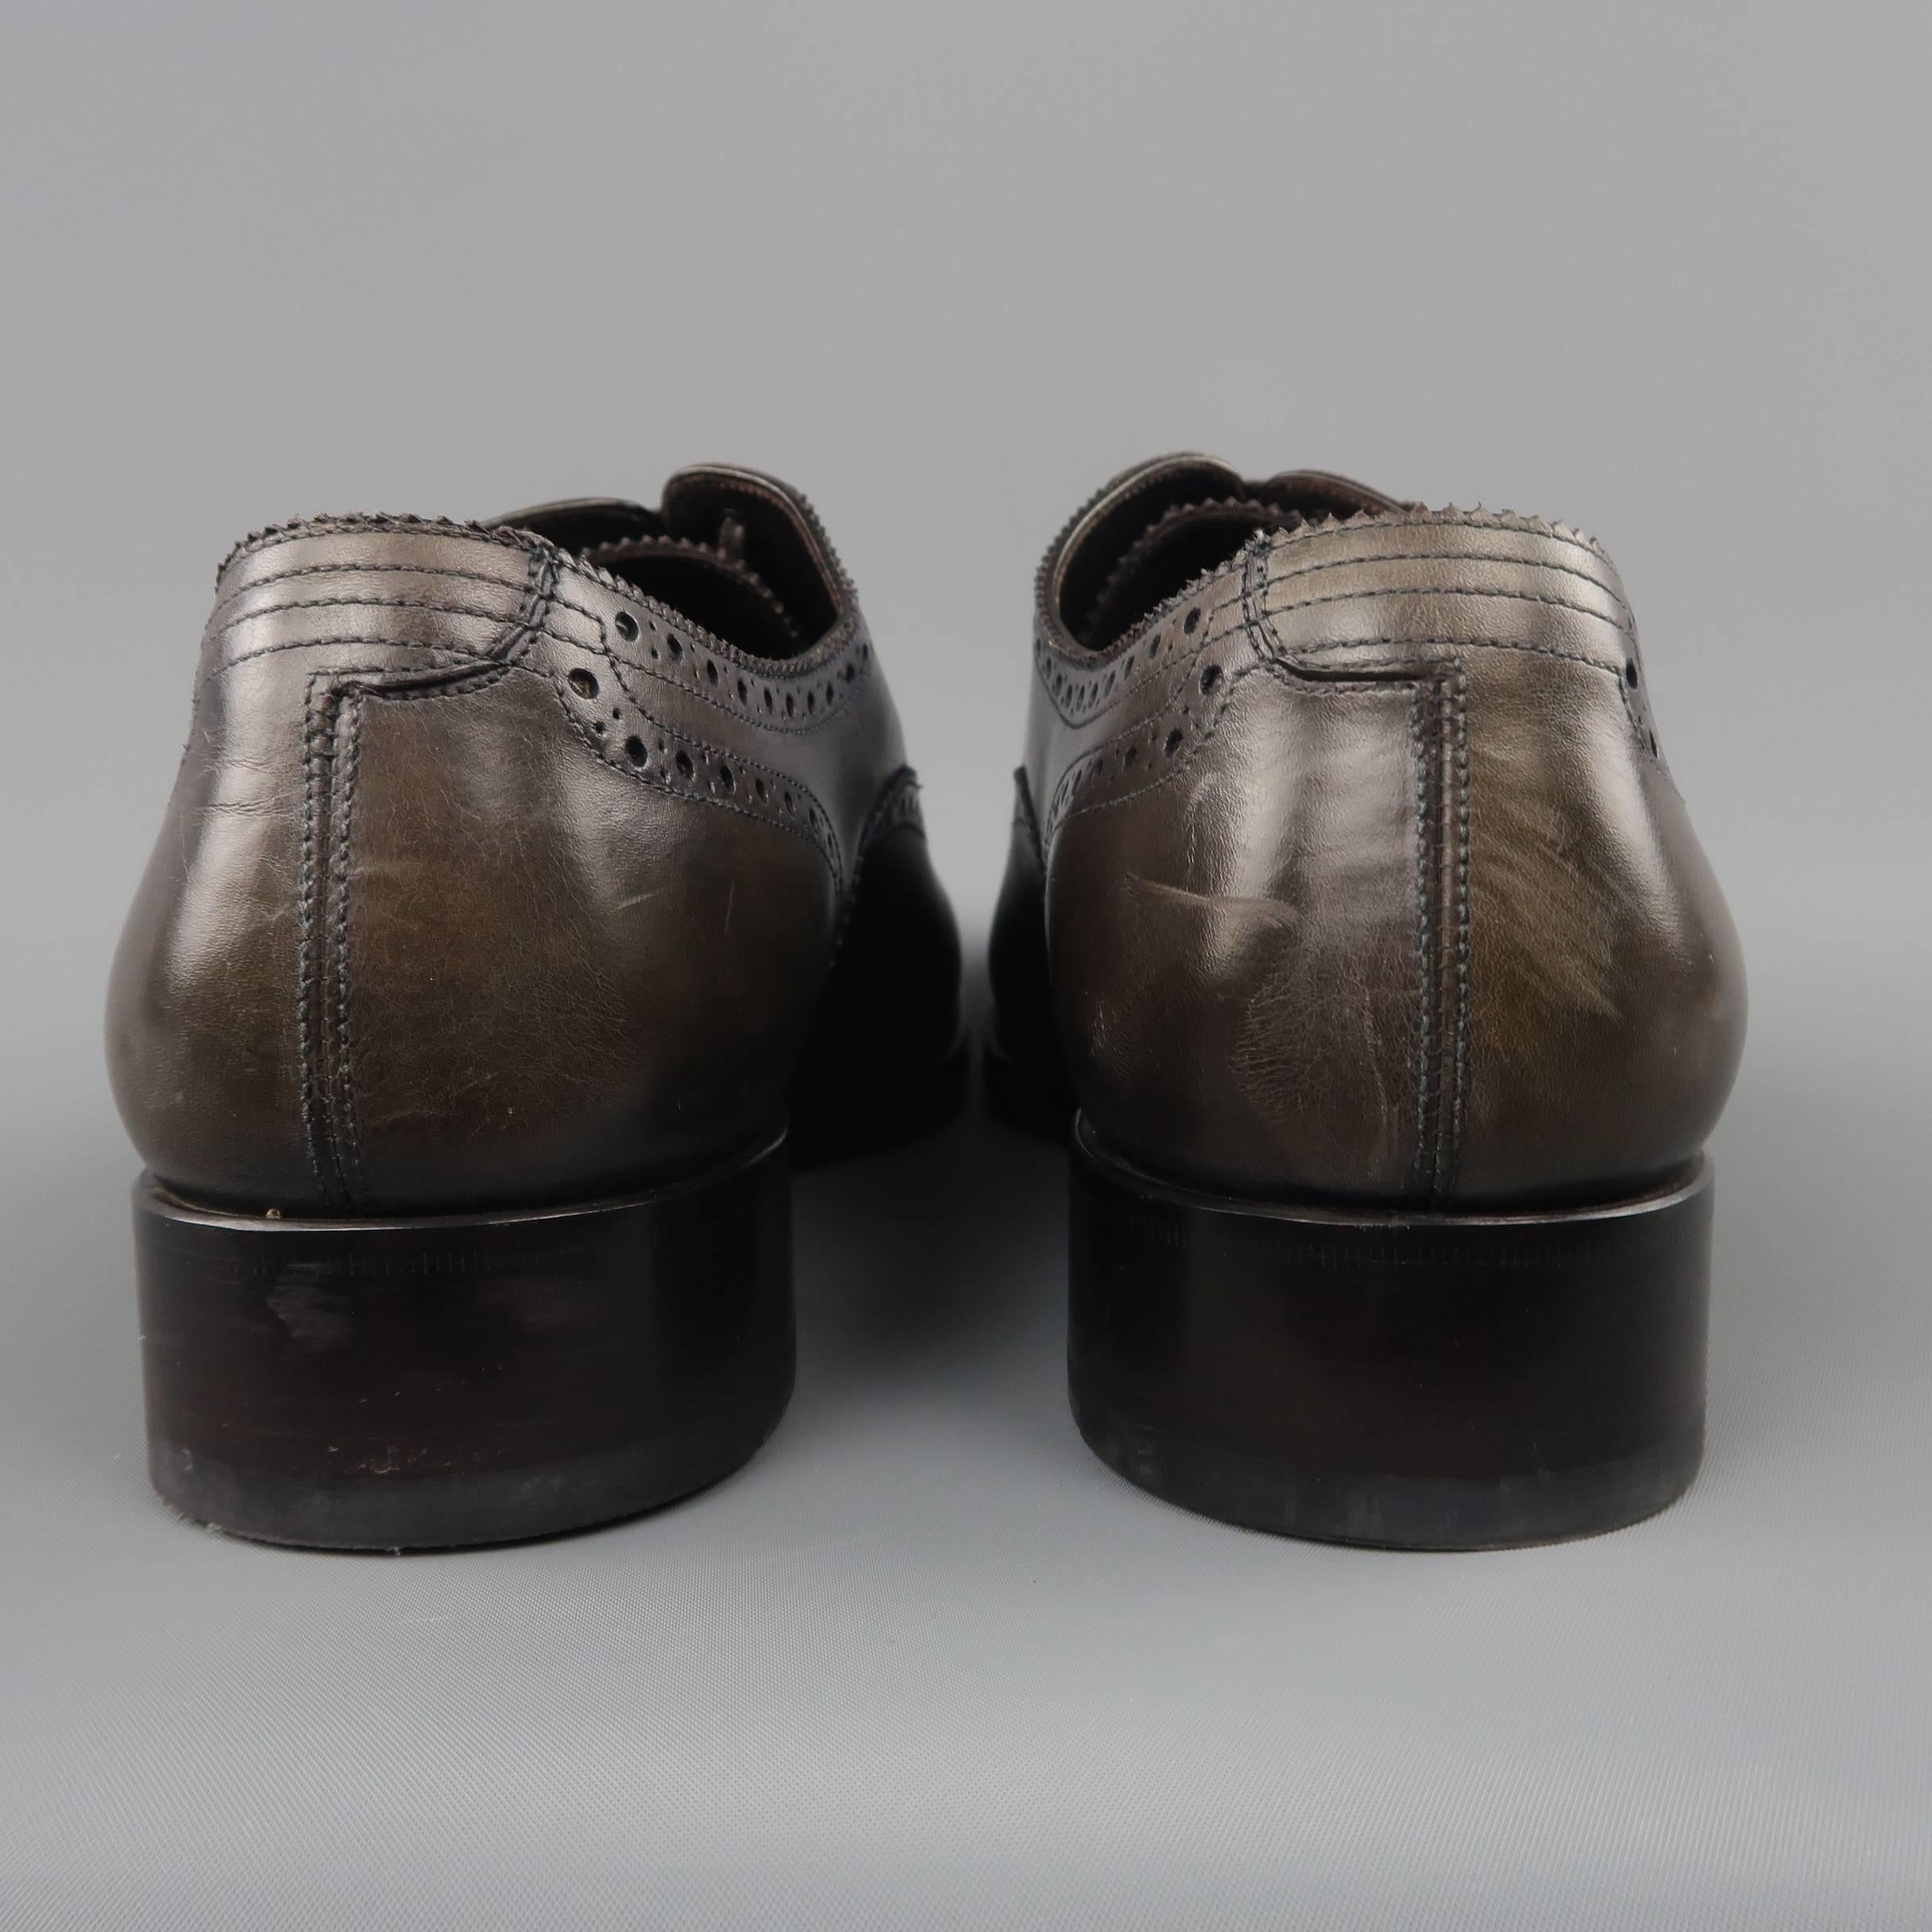 TOM FORD Shoes - Leather, Gray, Black, Dress, Edgar Medallion 4